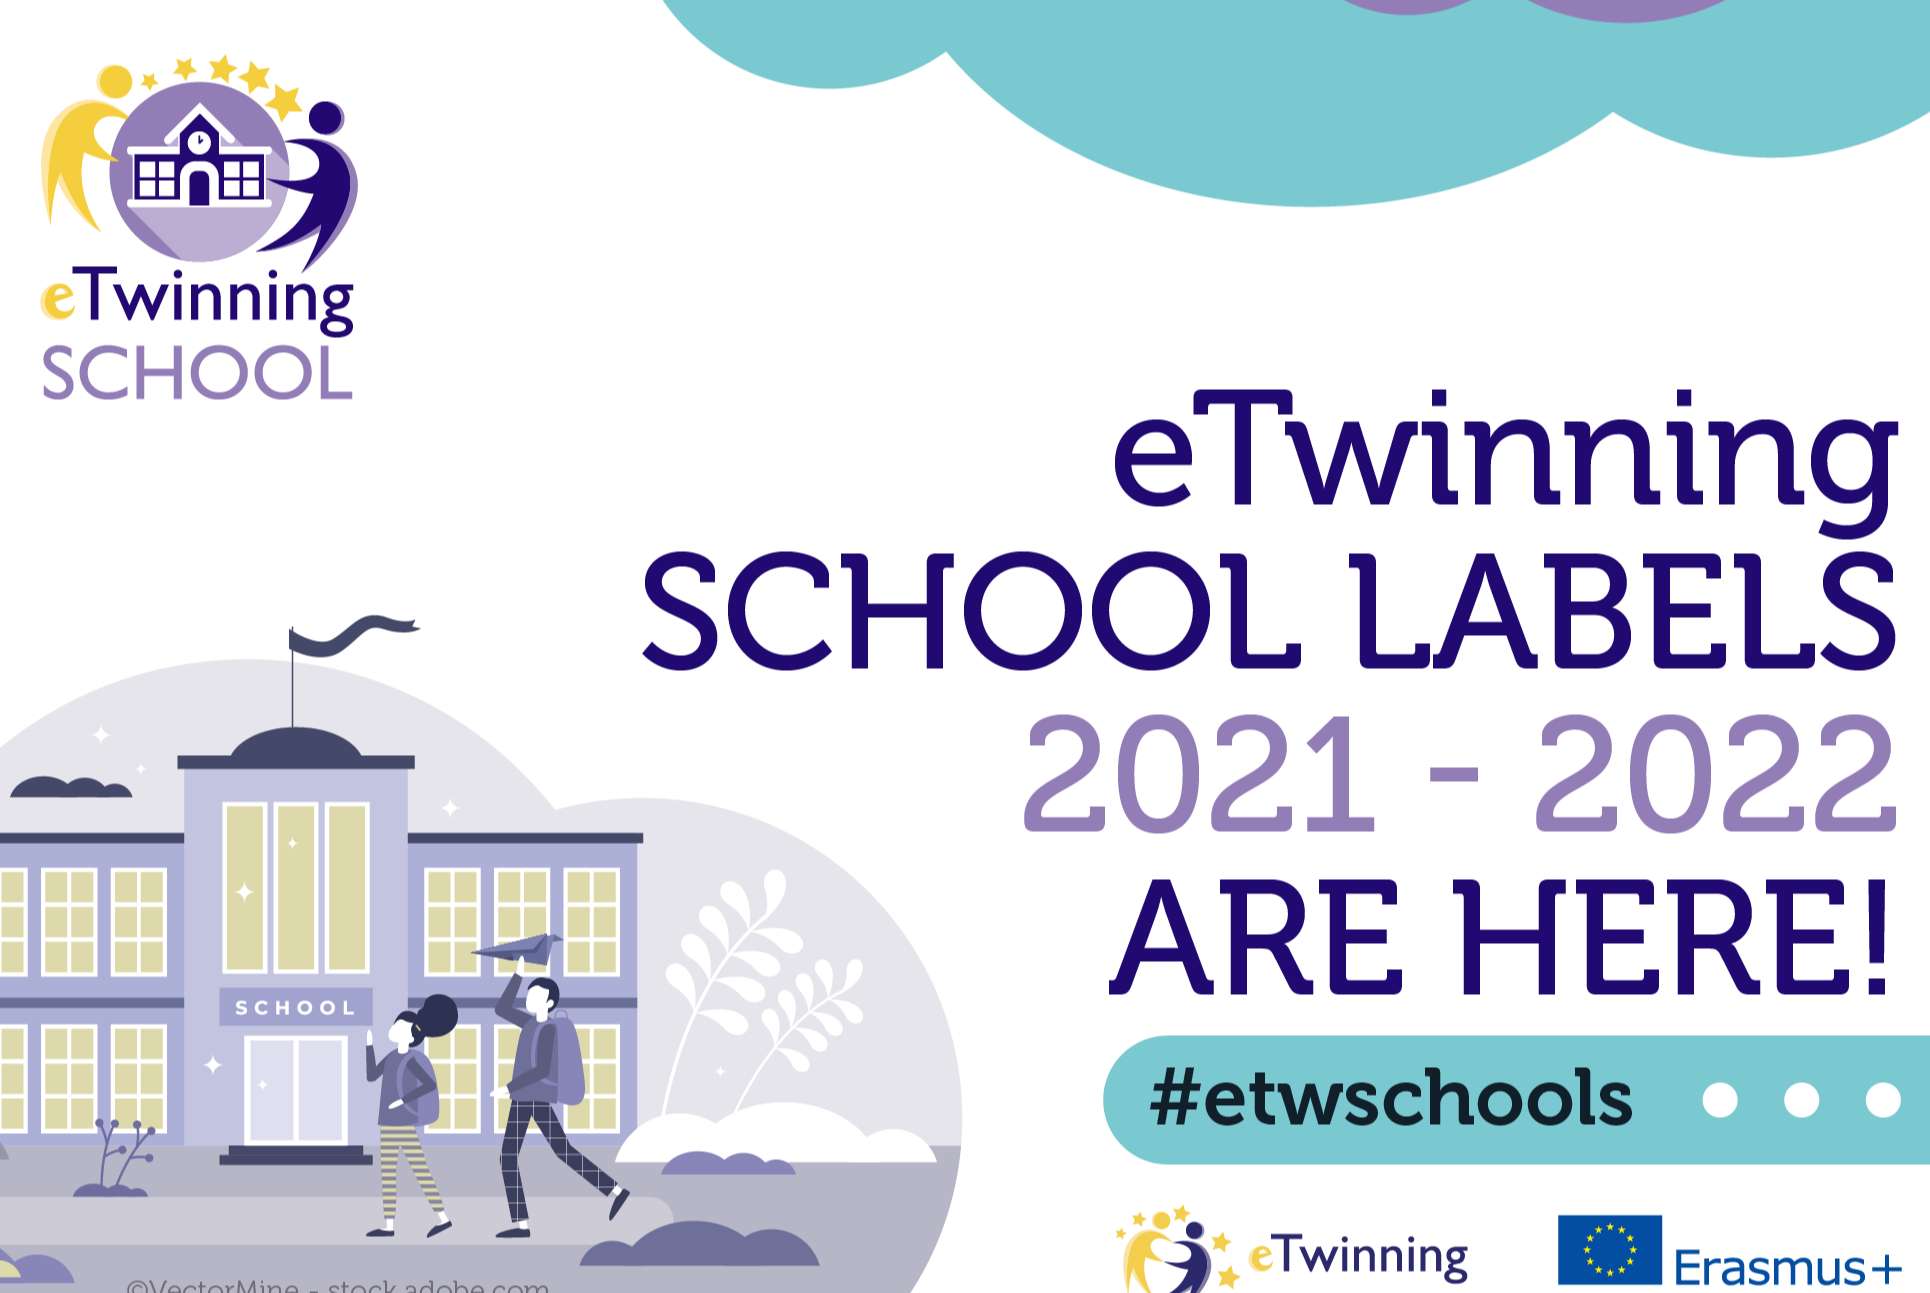 12 schools have been awarded the International eTwinning School Award.